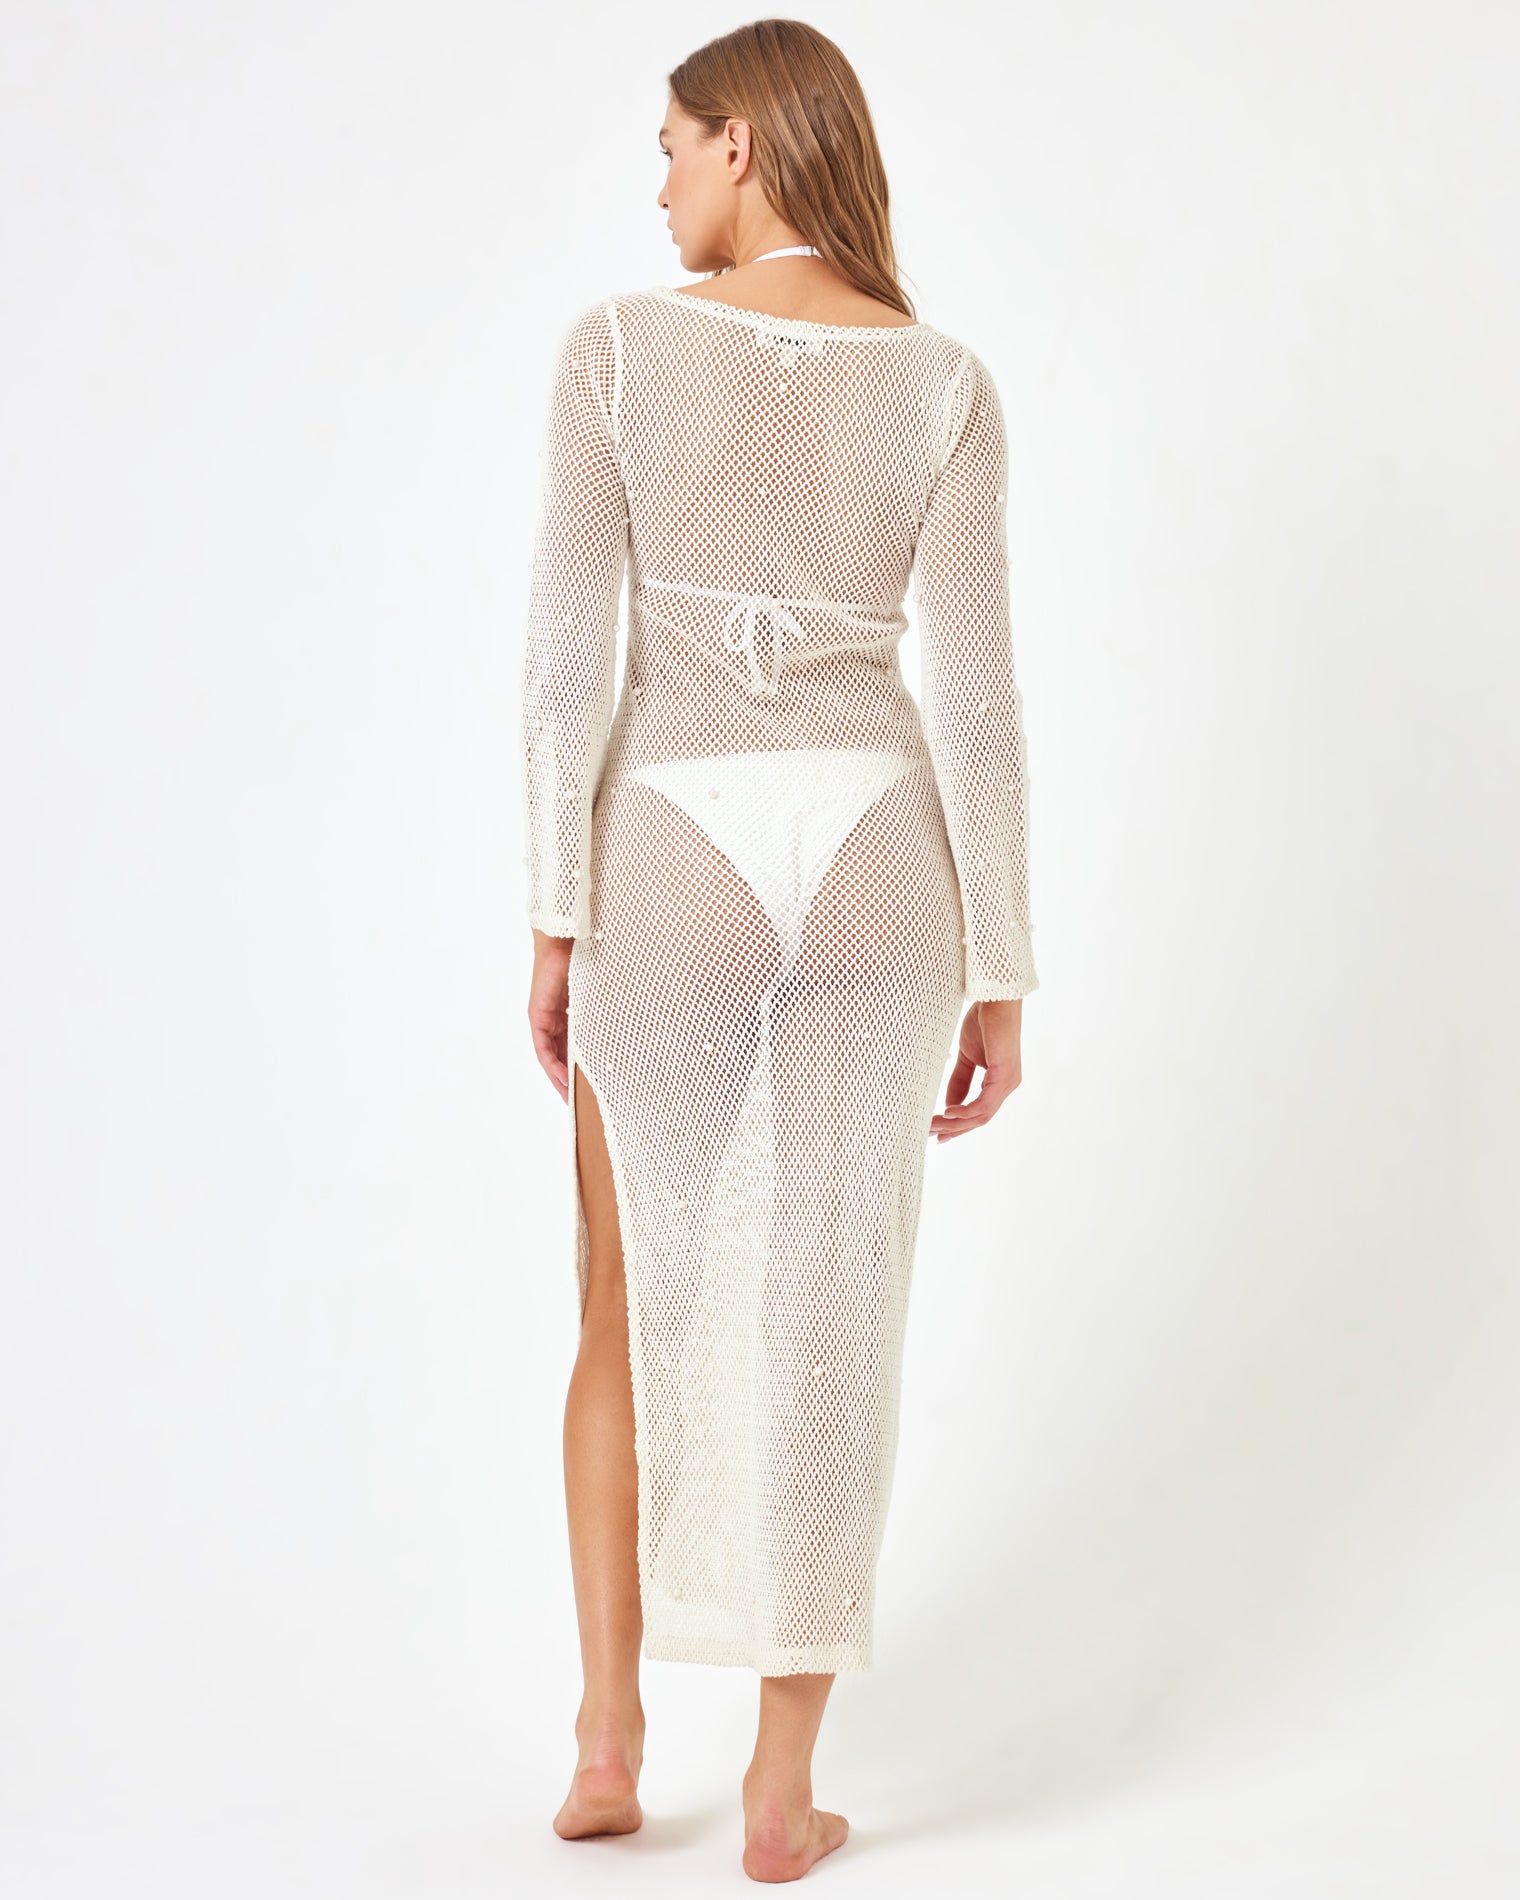 LSPACE X Anthropologie Venus Cover-Up Dress - Cream Cream | Model: Daria (size: S)